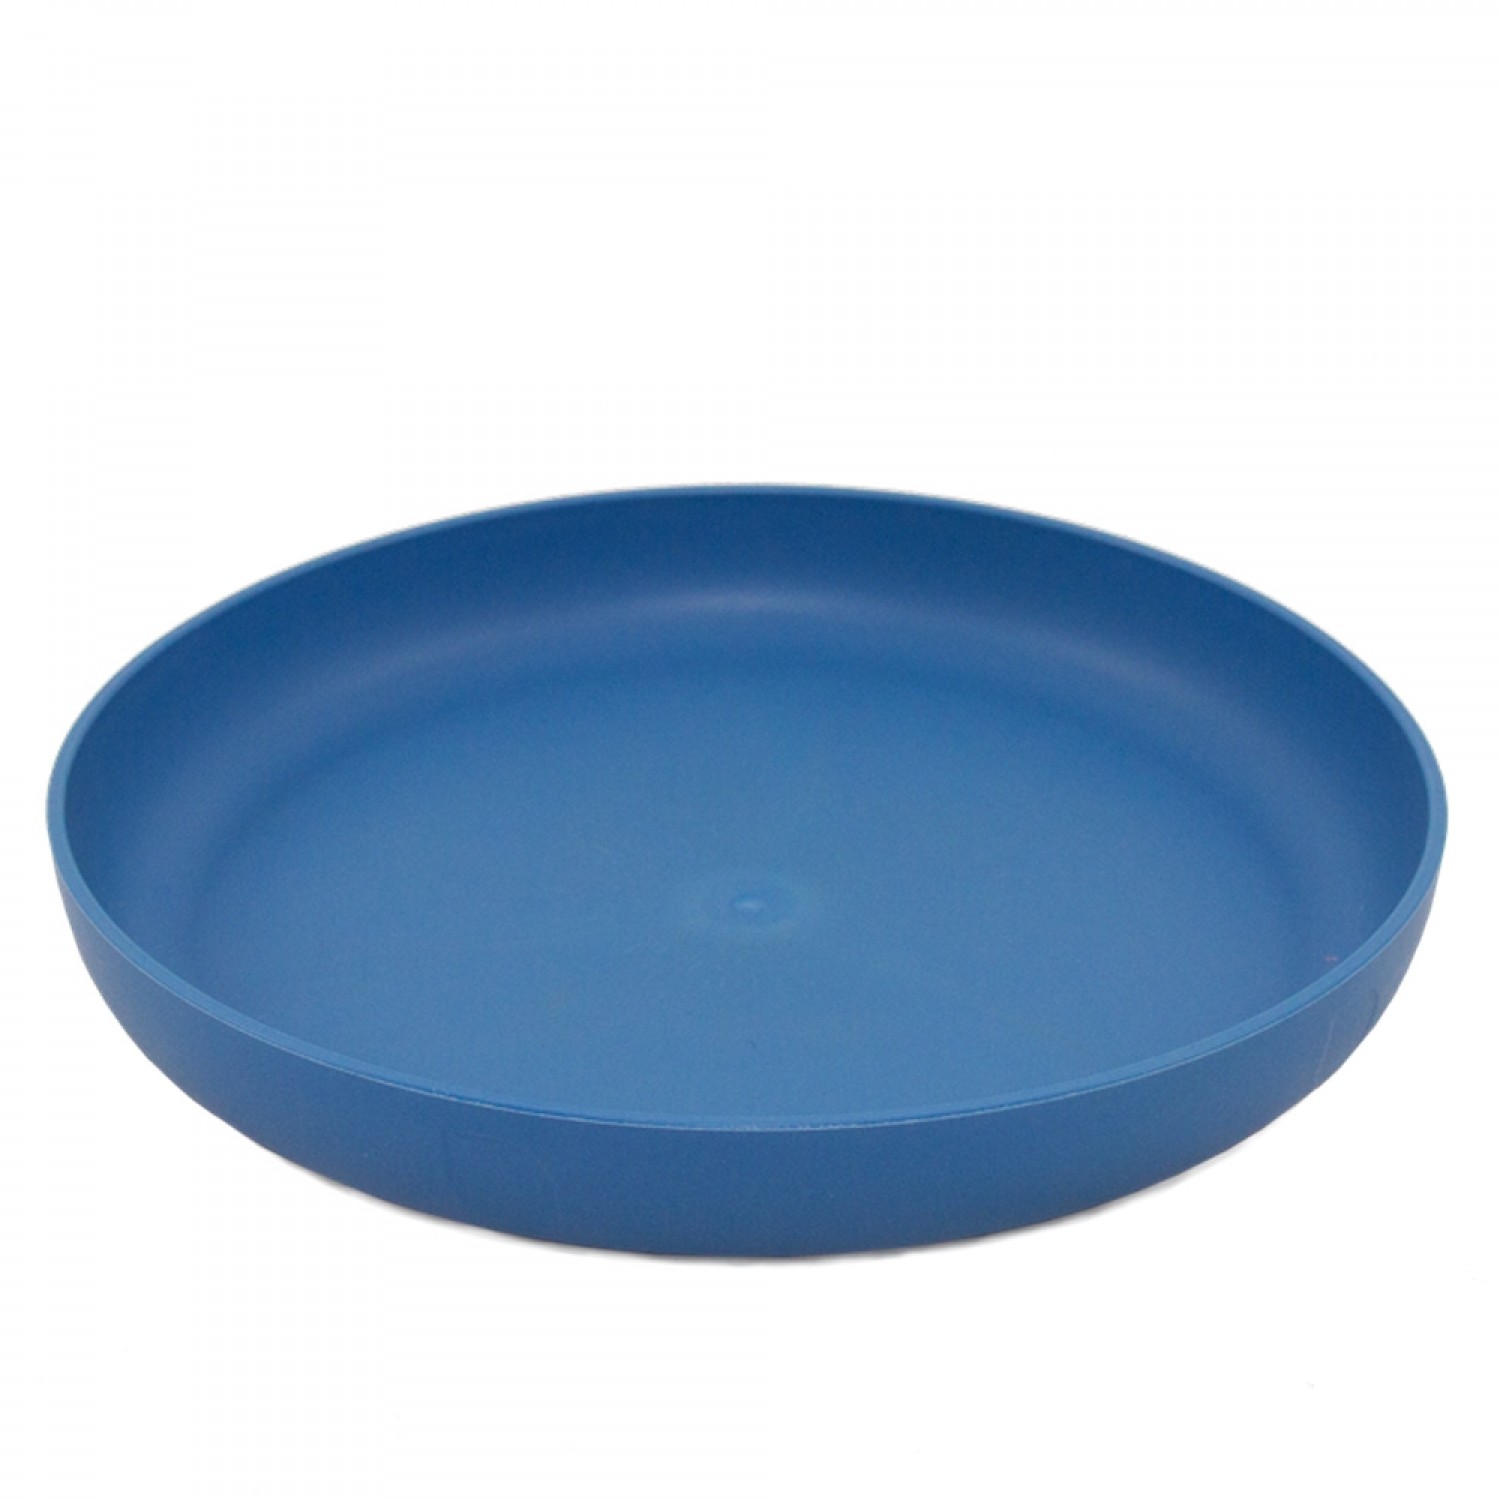 Colourful Plates from Bioplastics - Blue | ajaa!